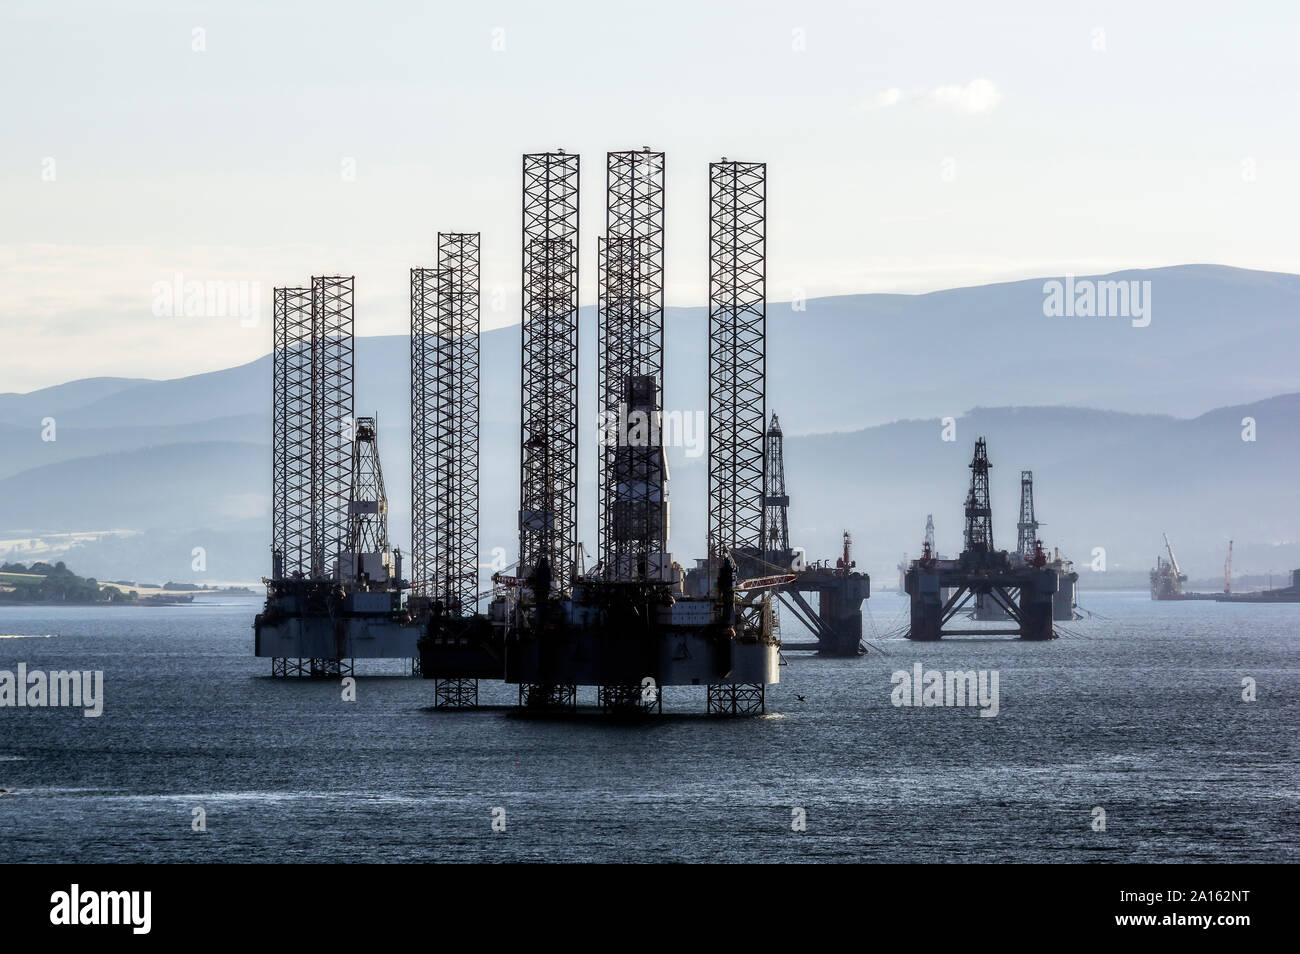 United Kingdom, Scotland, Invergordon, oil platform Stock Photo